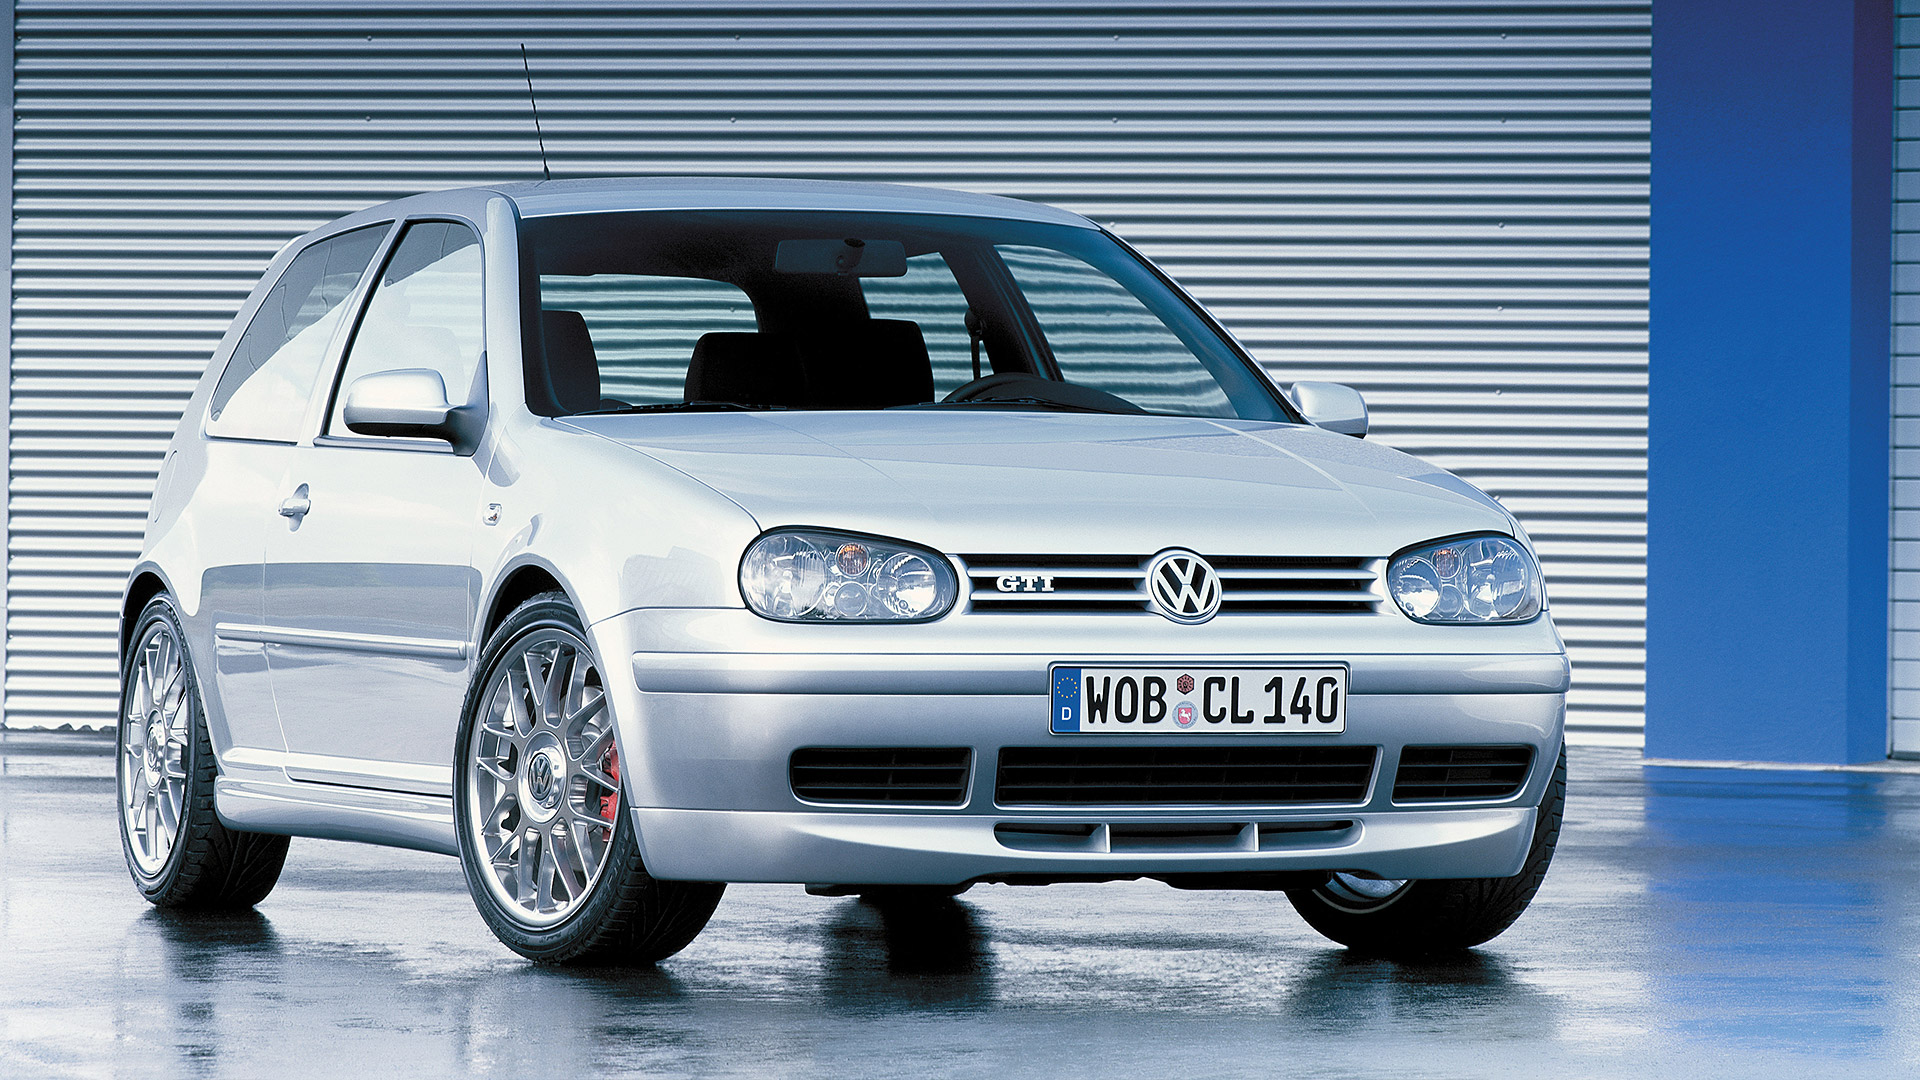  2001 Volkswagen Golf GTI 25th Anniverary Wallpaper.